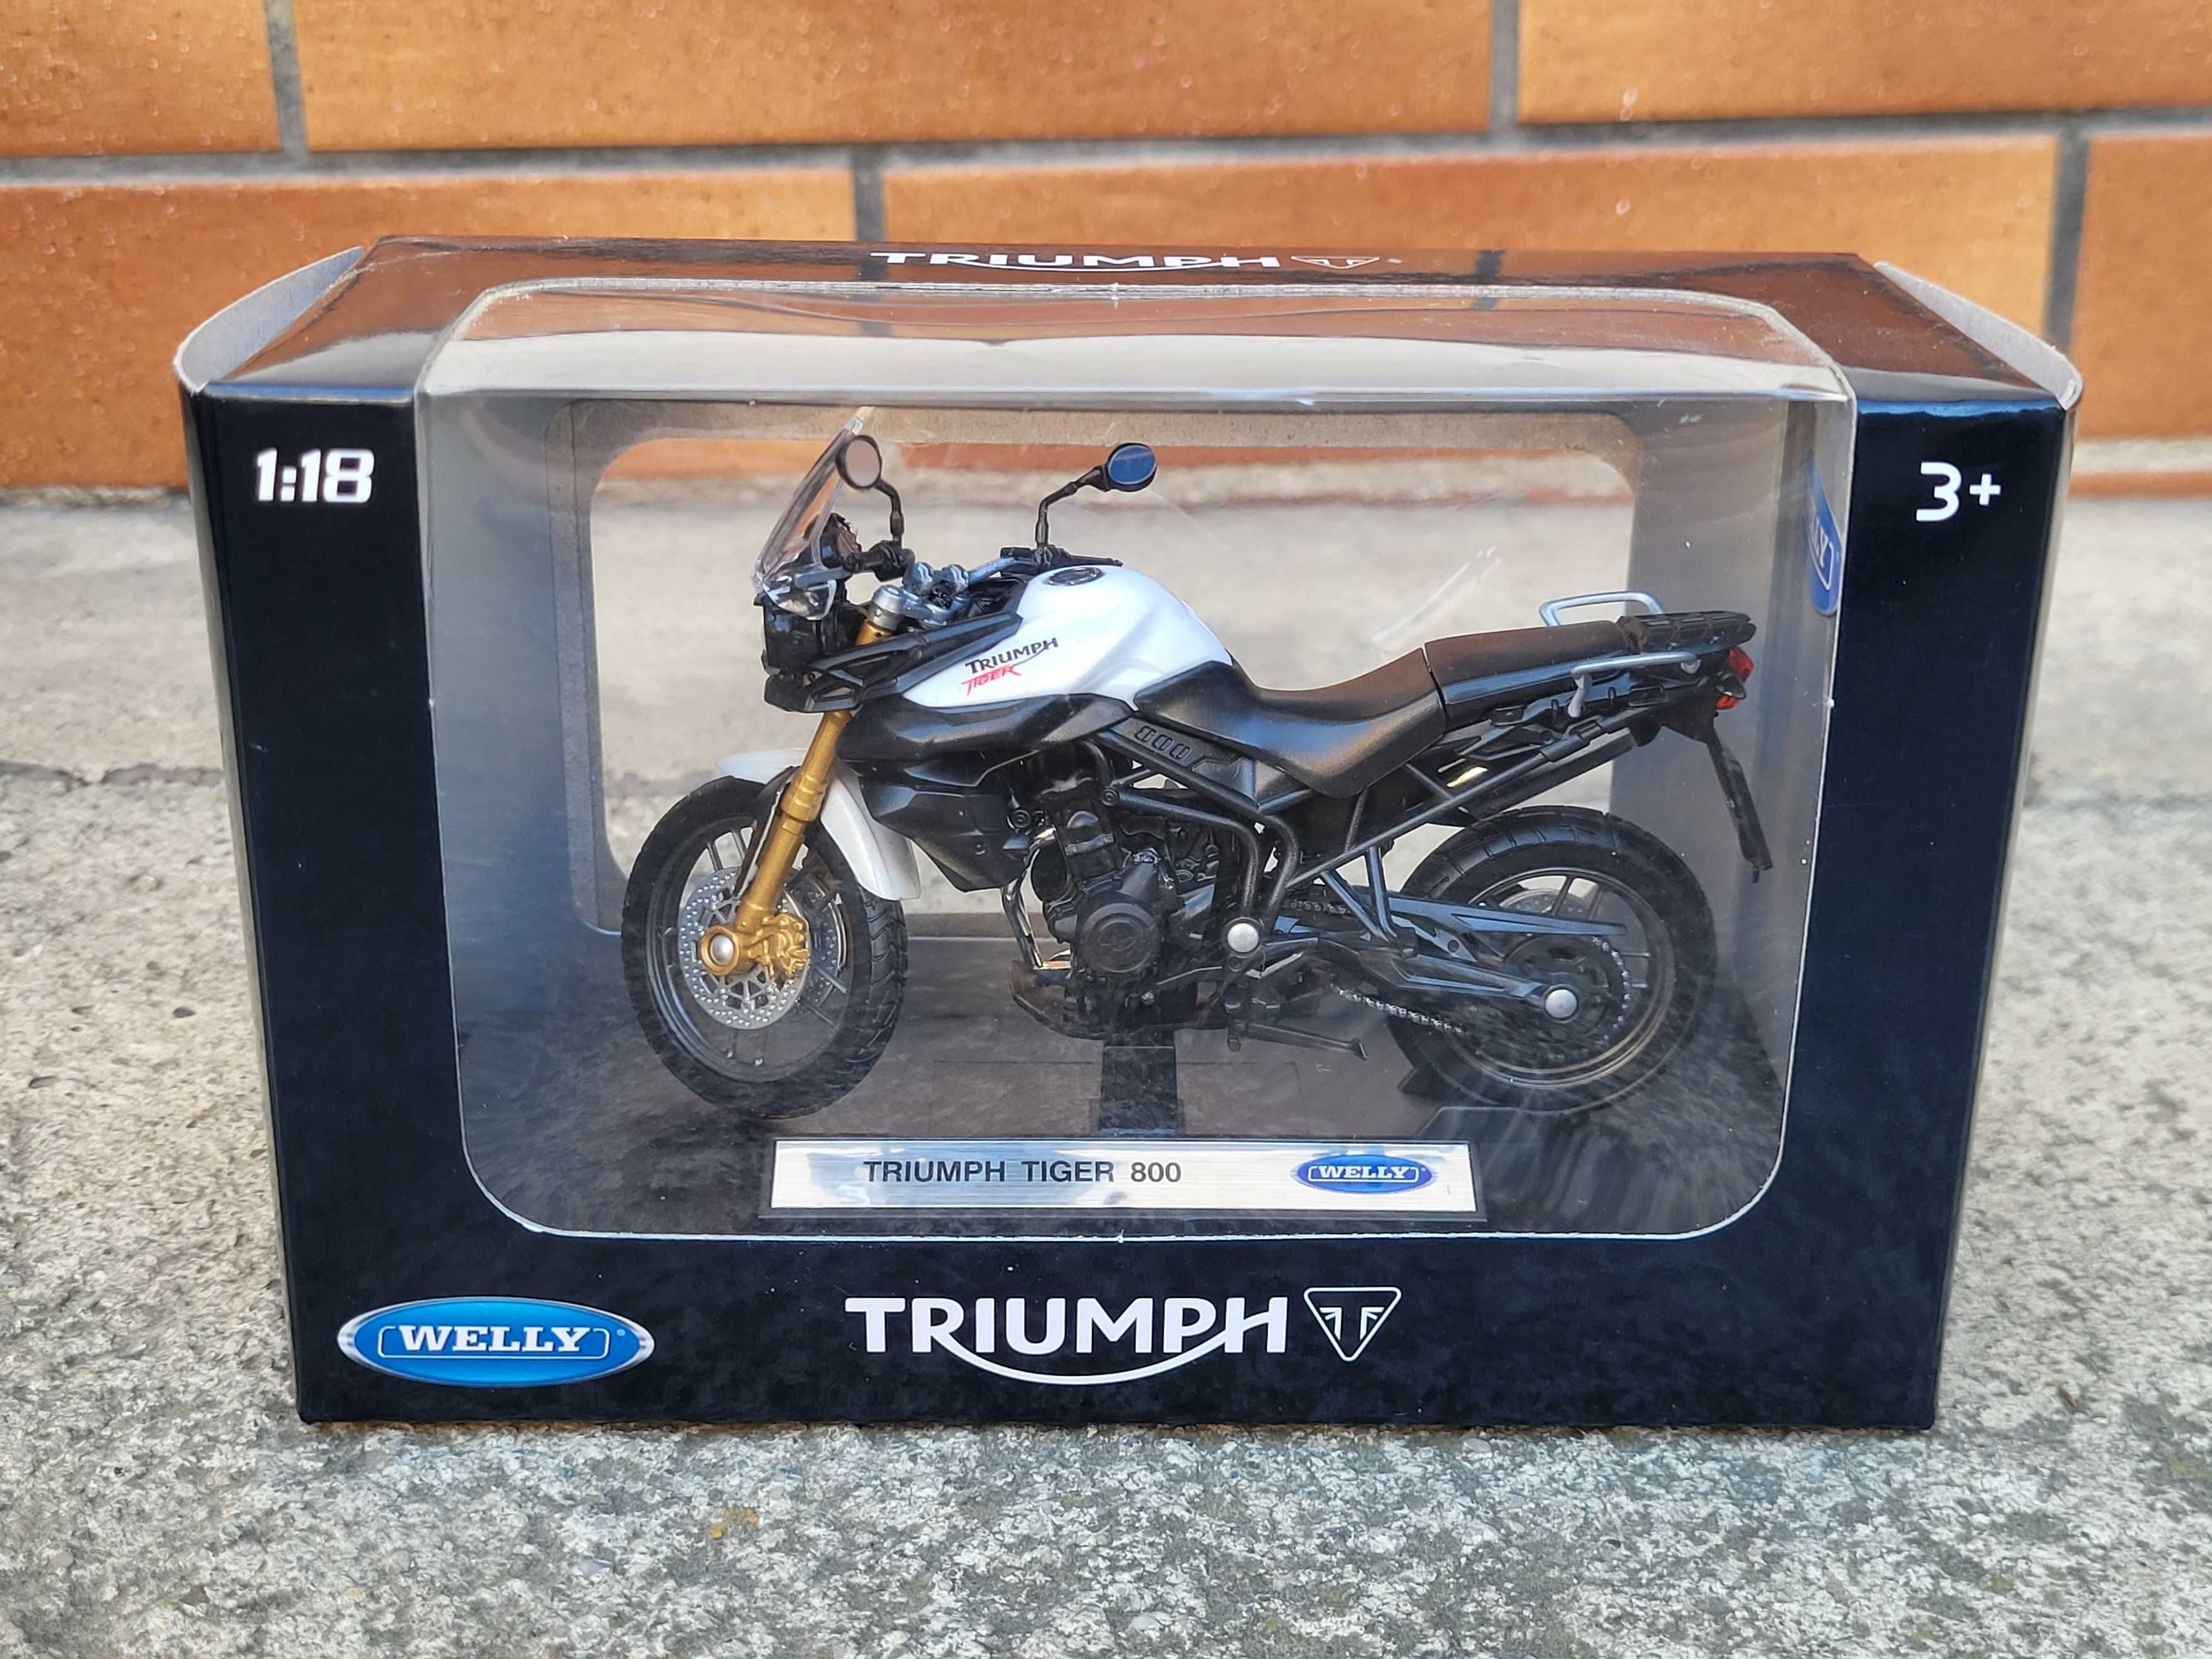 Motocykl motor Triumph Tiger 800 Unikat Kolekcja modeli 1:18 Welly